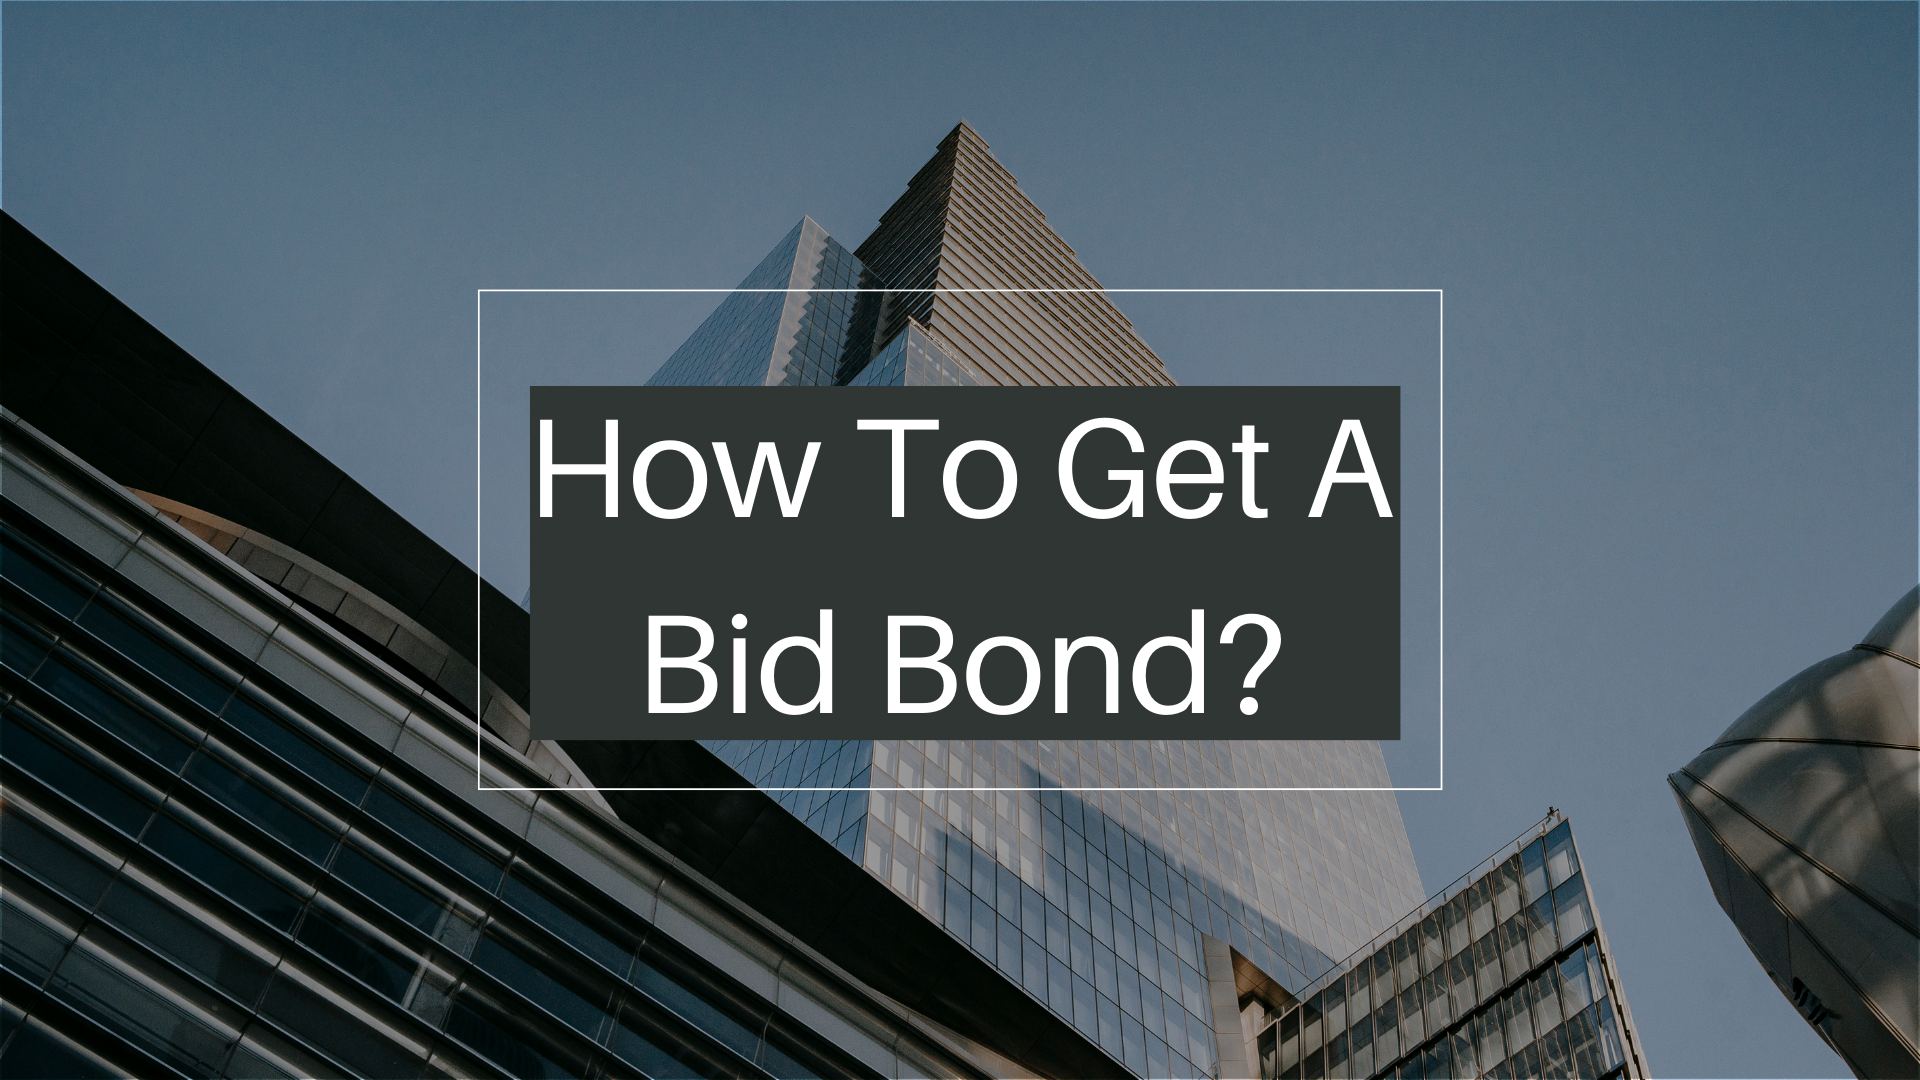 bid bond - How To Get A Bid Bond? - tall tower